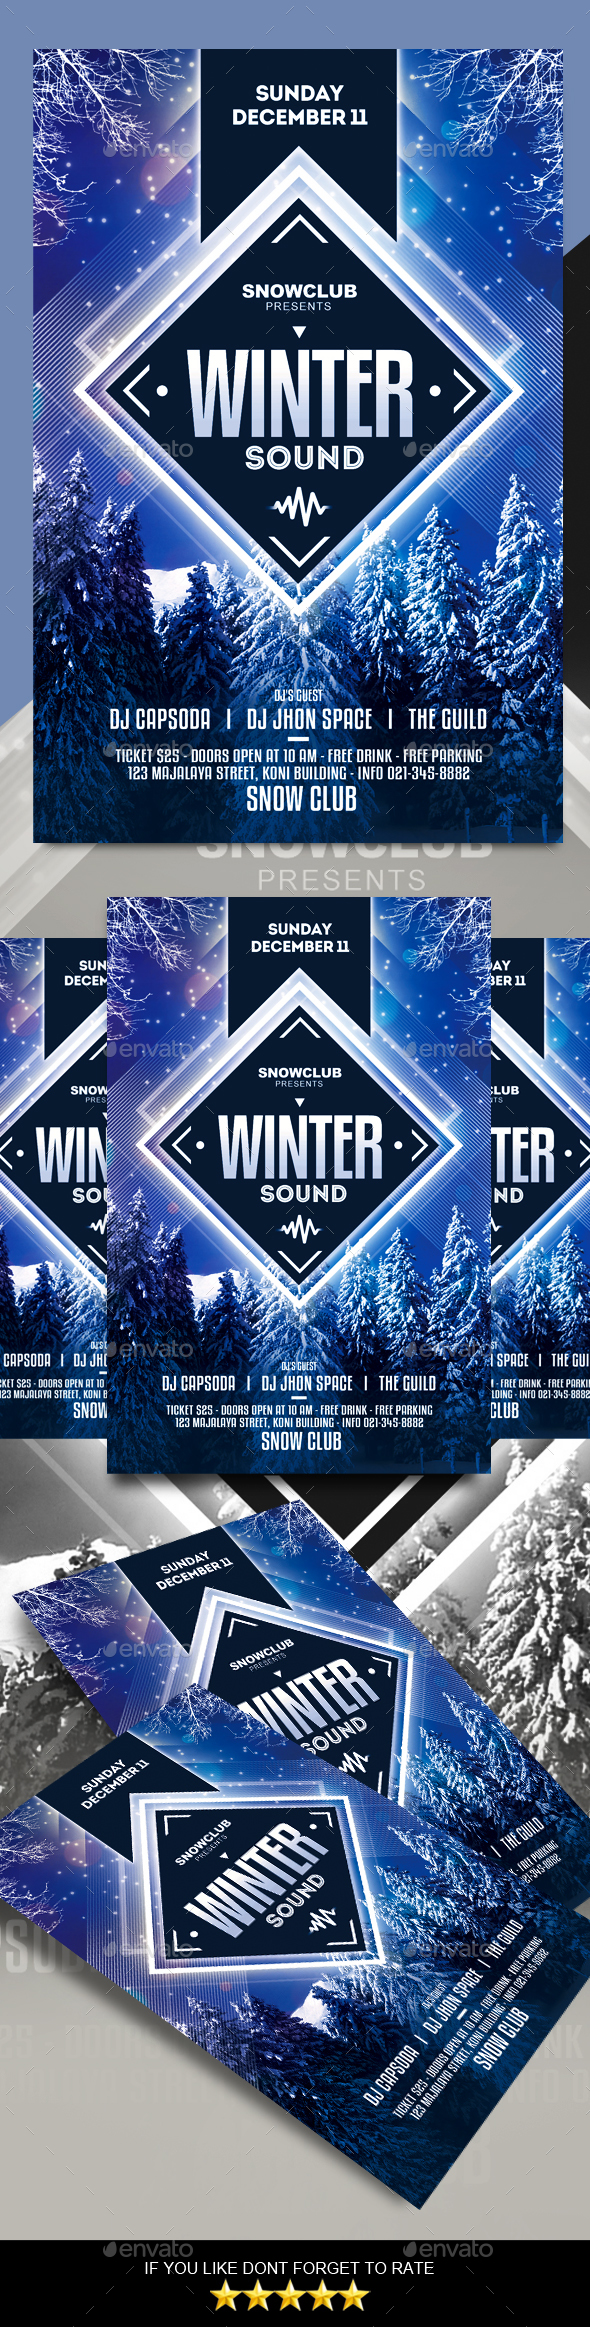 GraphicRiver Winter Sound Flyer 21098179